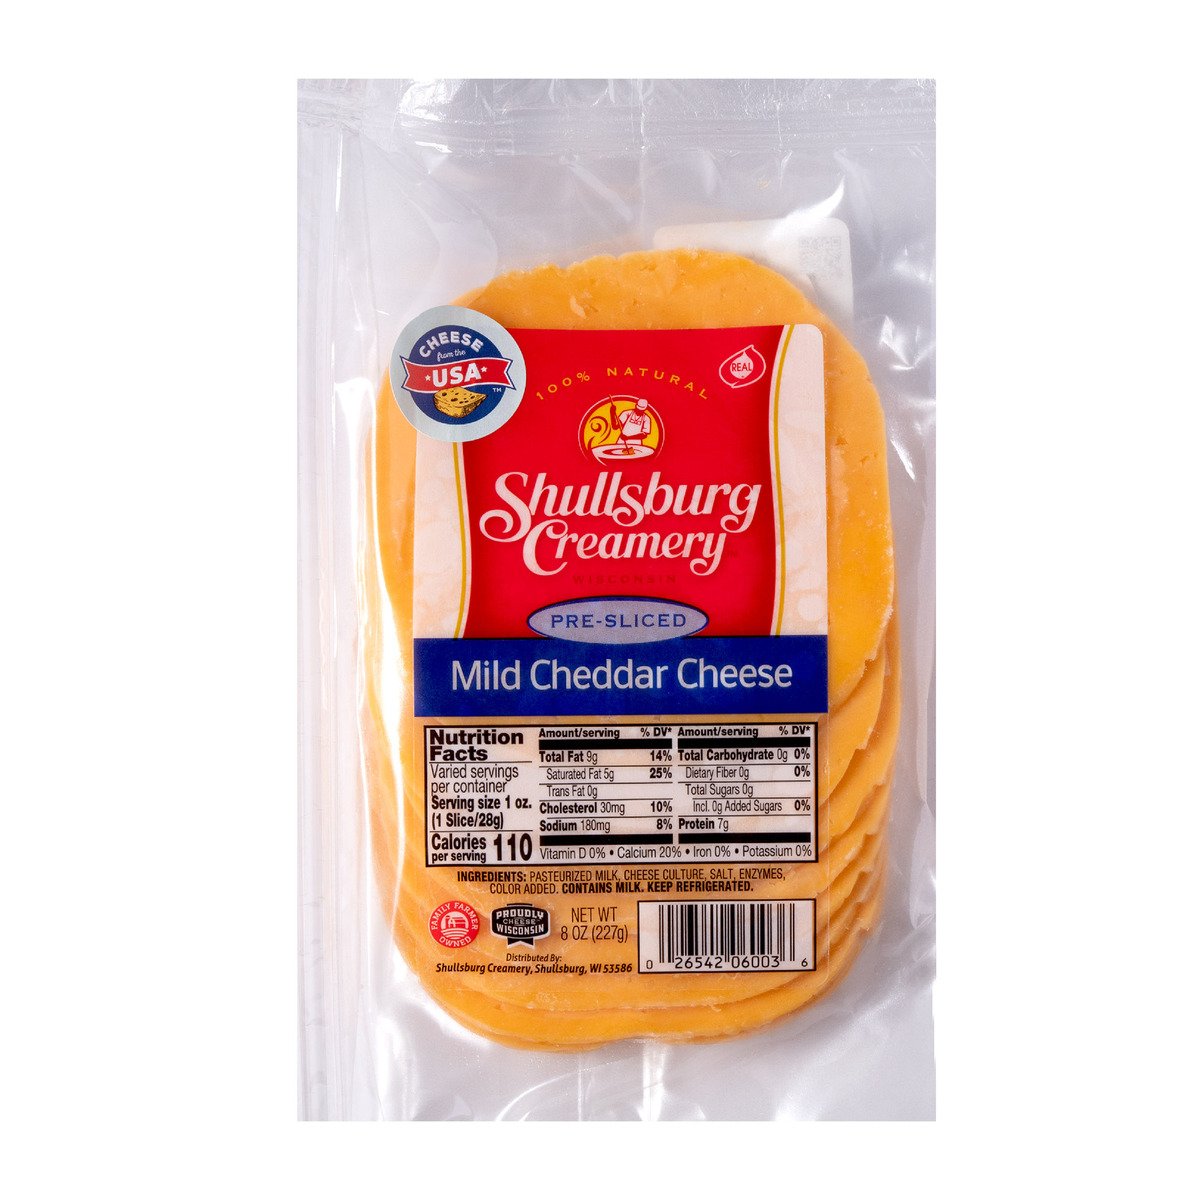 Shullsburg Creamery Pre-Sliced Mild Cheddar Cheese 227g